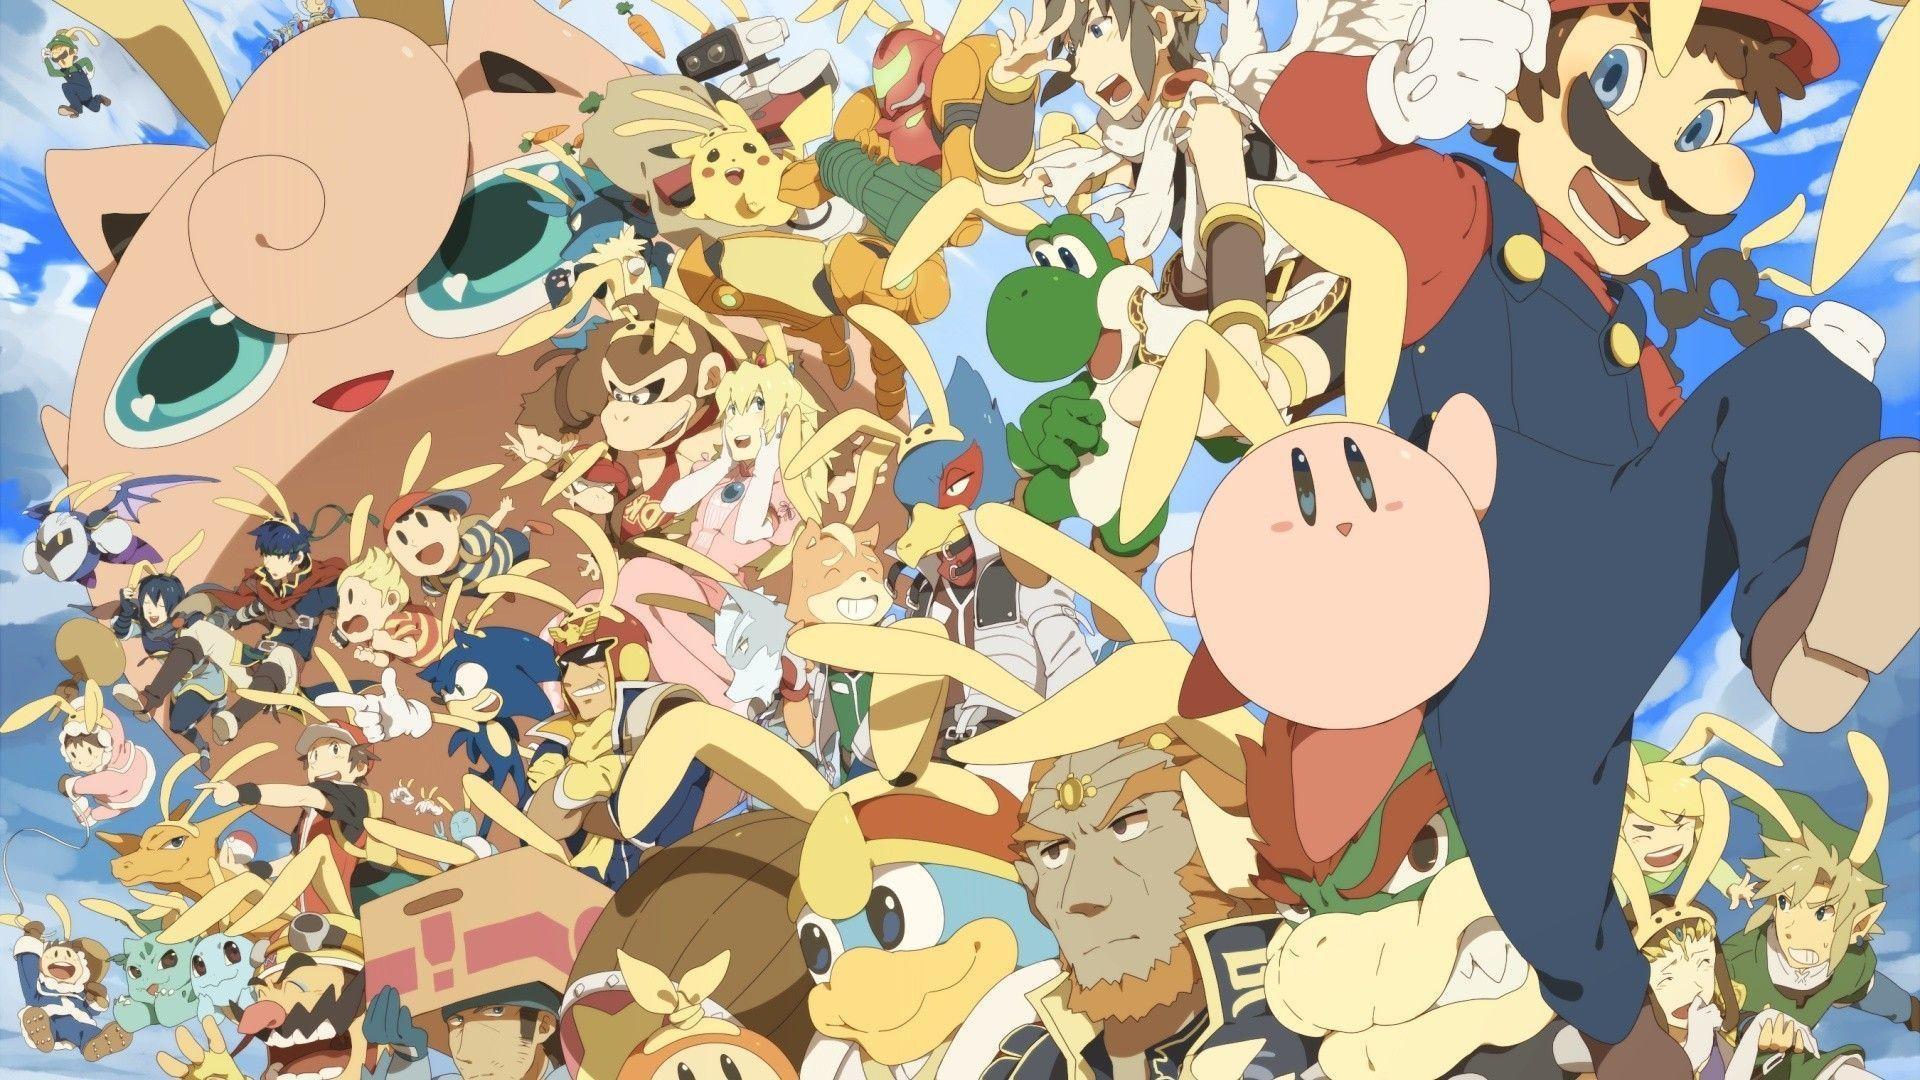 Anime Super Smash Bros. Wallpaper Image. HD Wallpaper Image